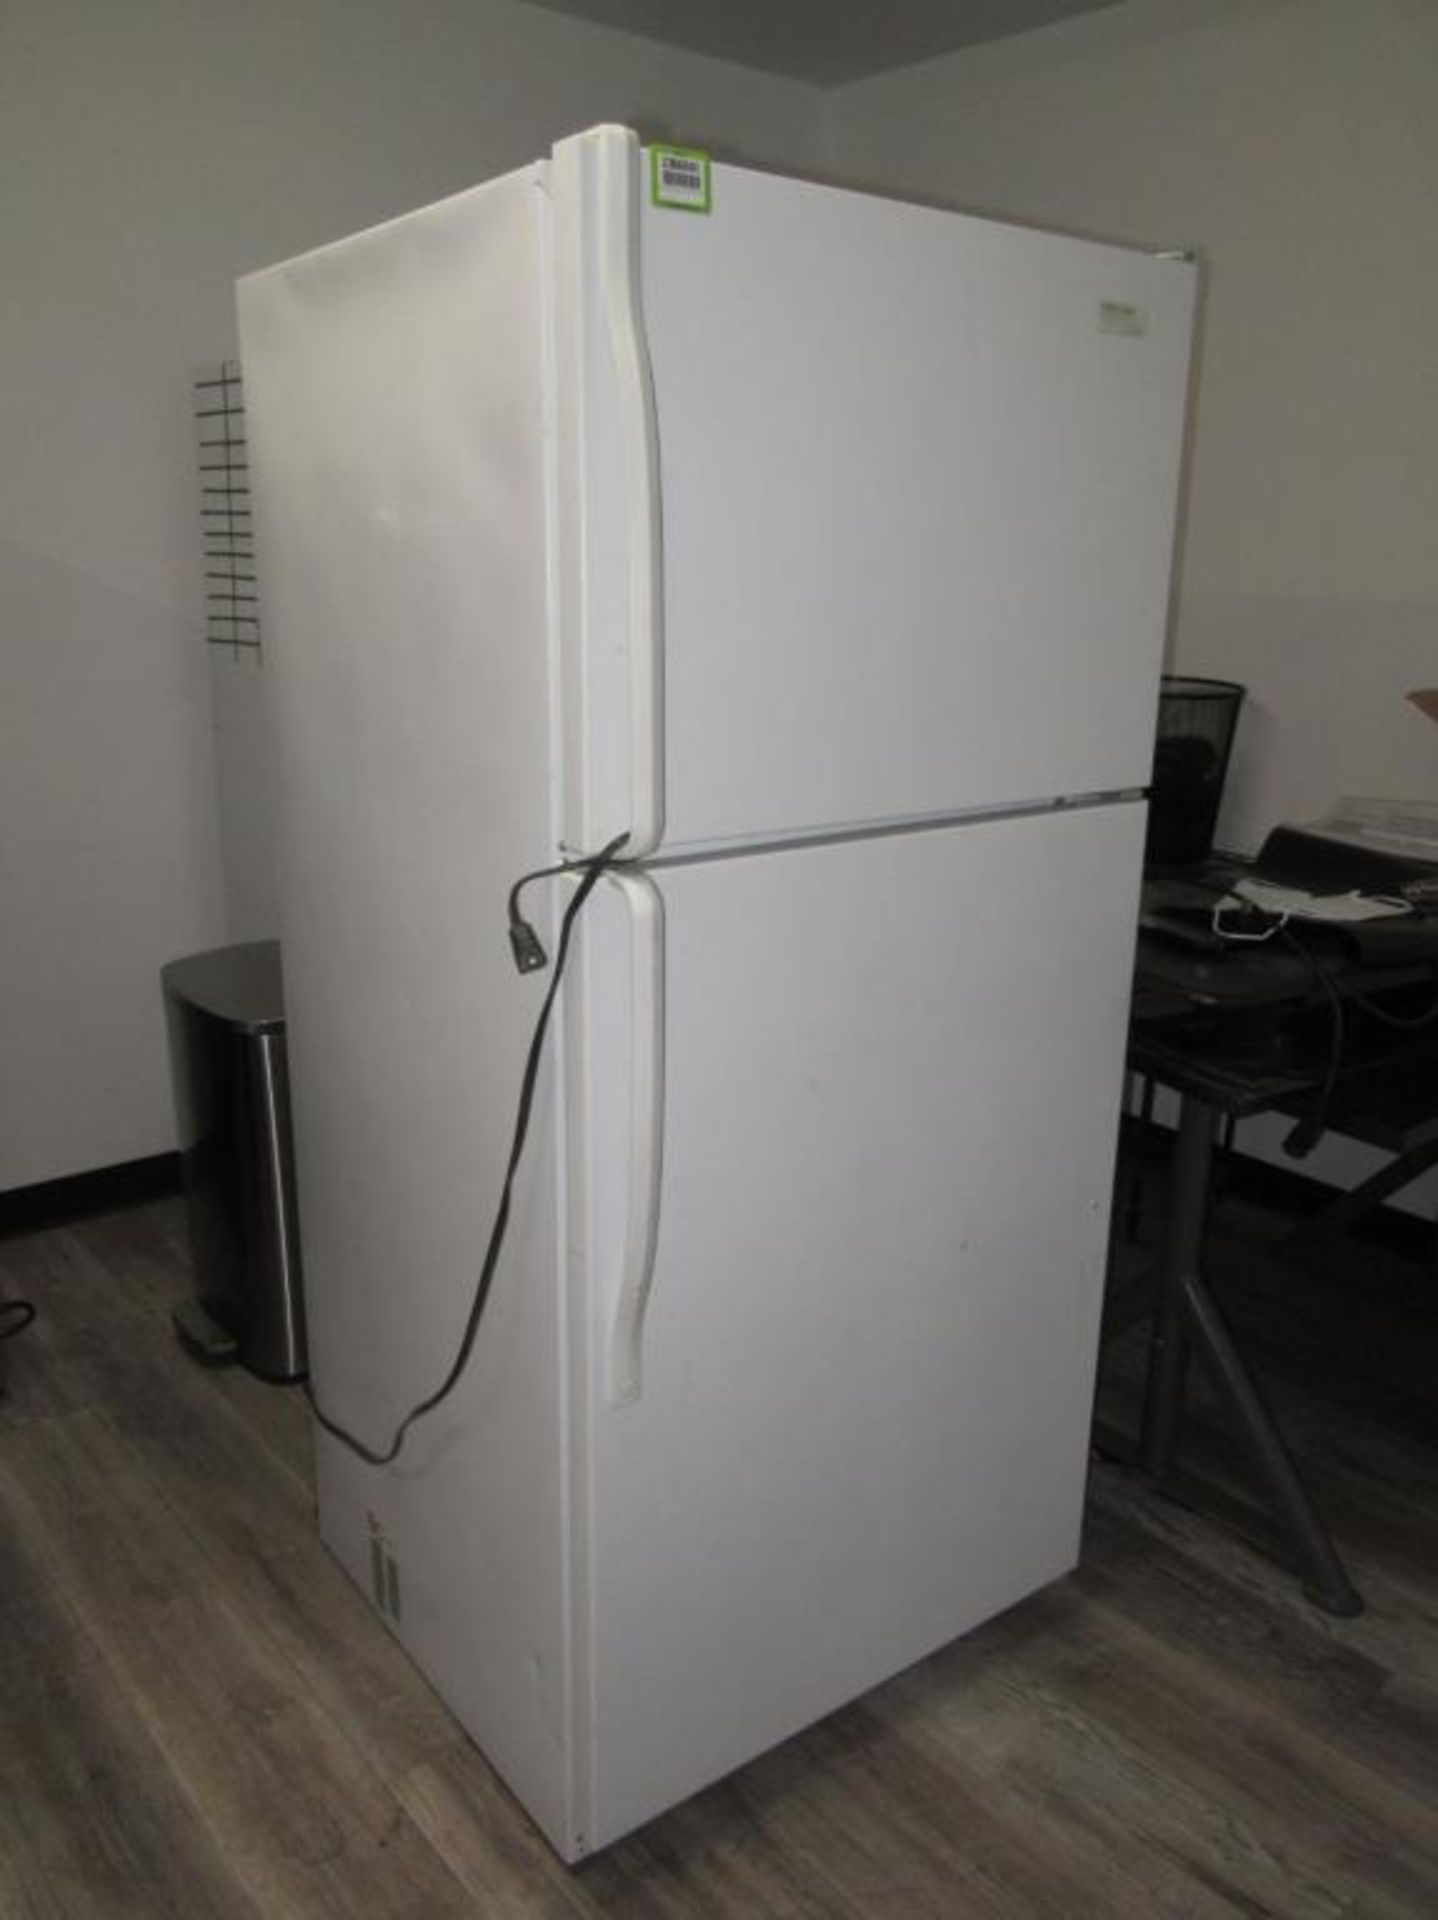 Whirlpool Refrigerator/Freezer